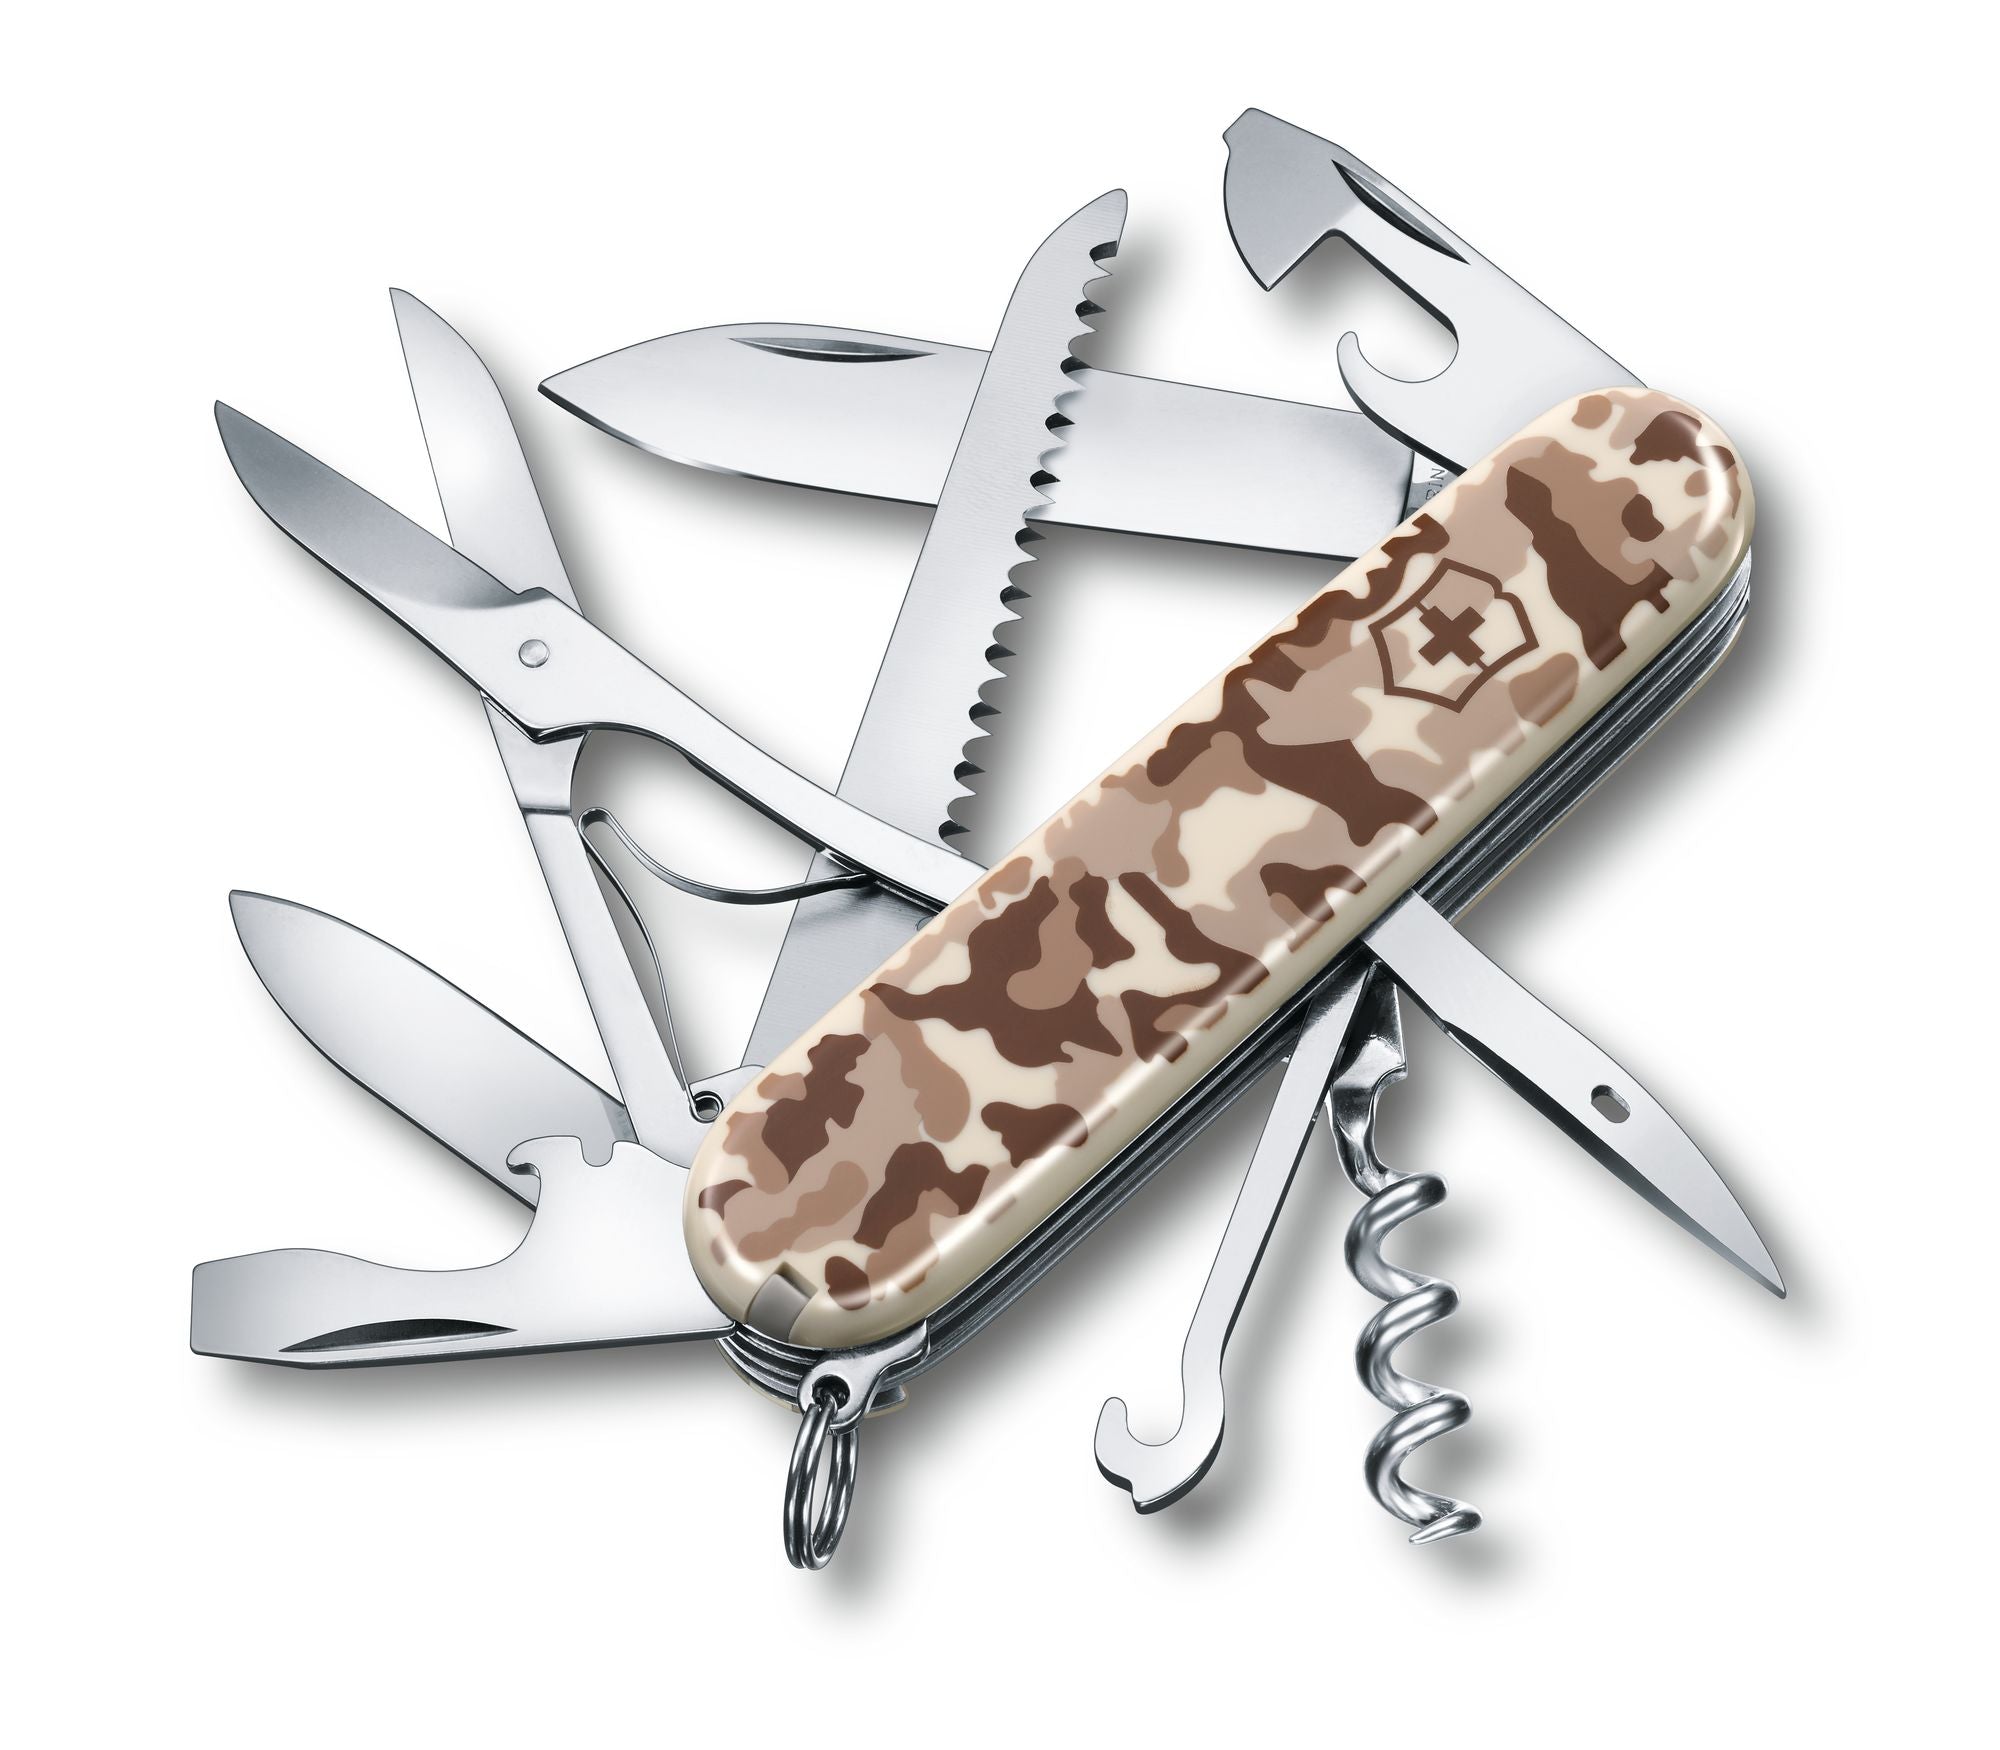 Victorinox Huntsman Desert Camouflage Knife